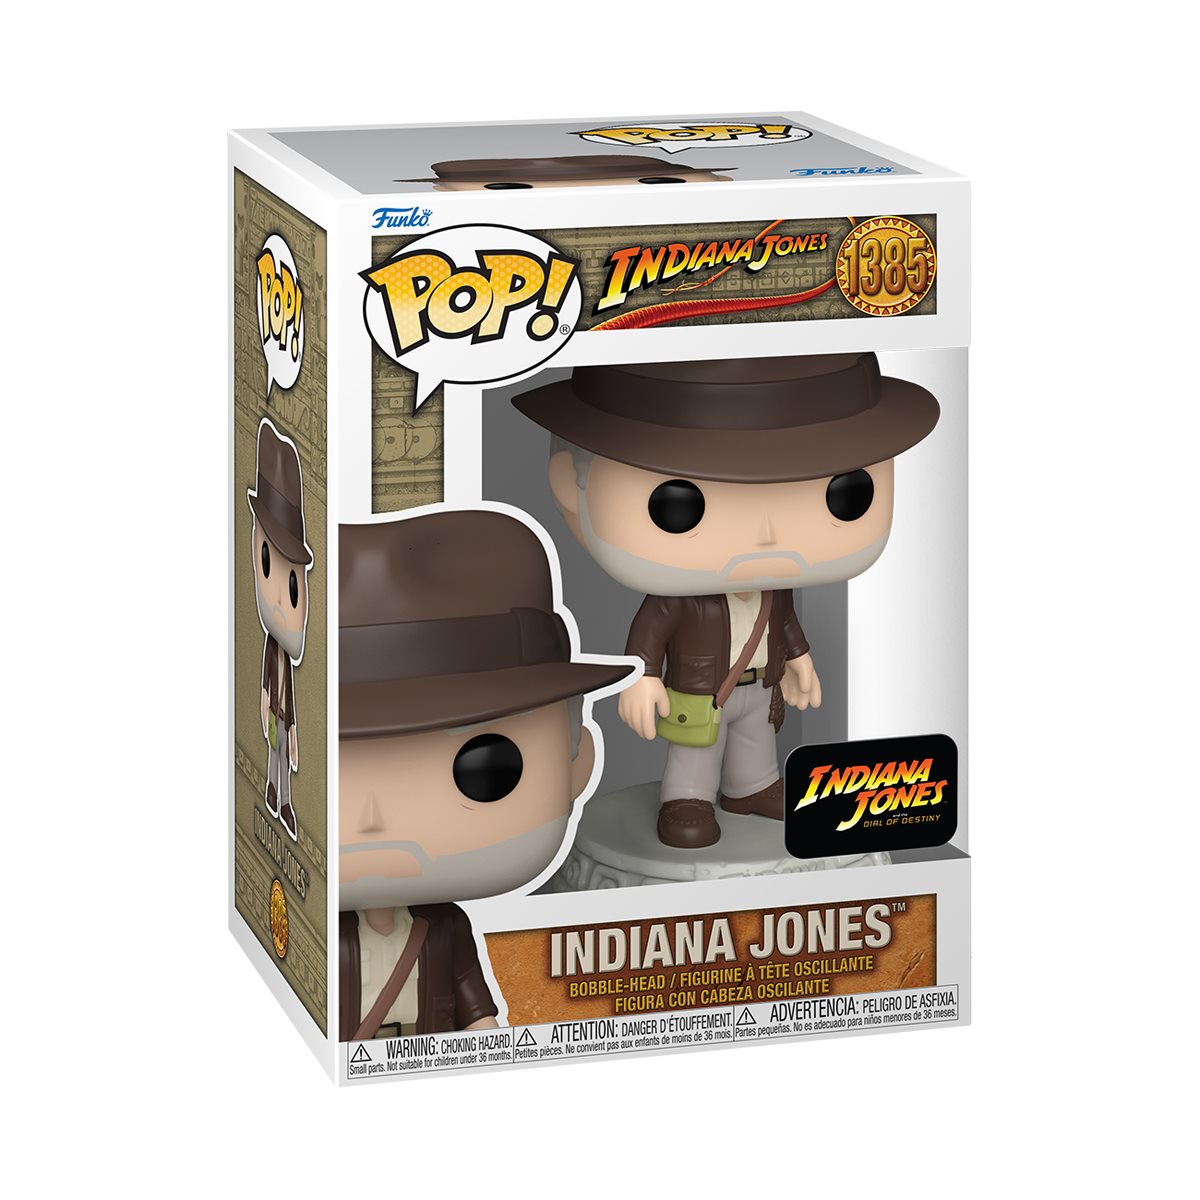 Indiana Jones and the Dial of Destiny Indiana Jones Funko Pop! Vinyl Figure #1385